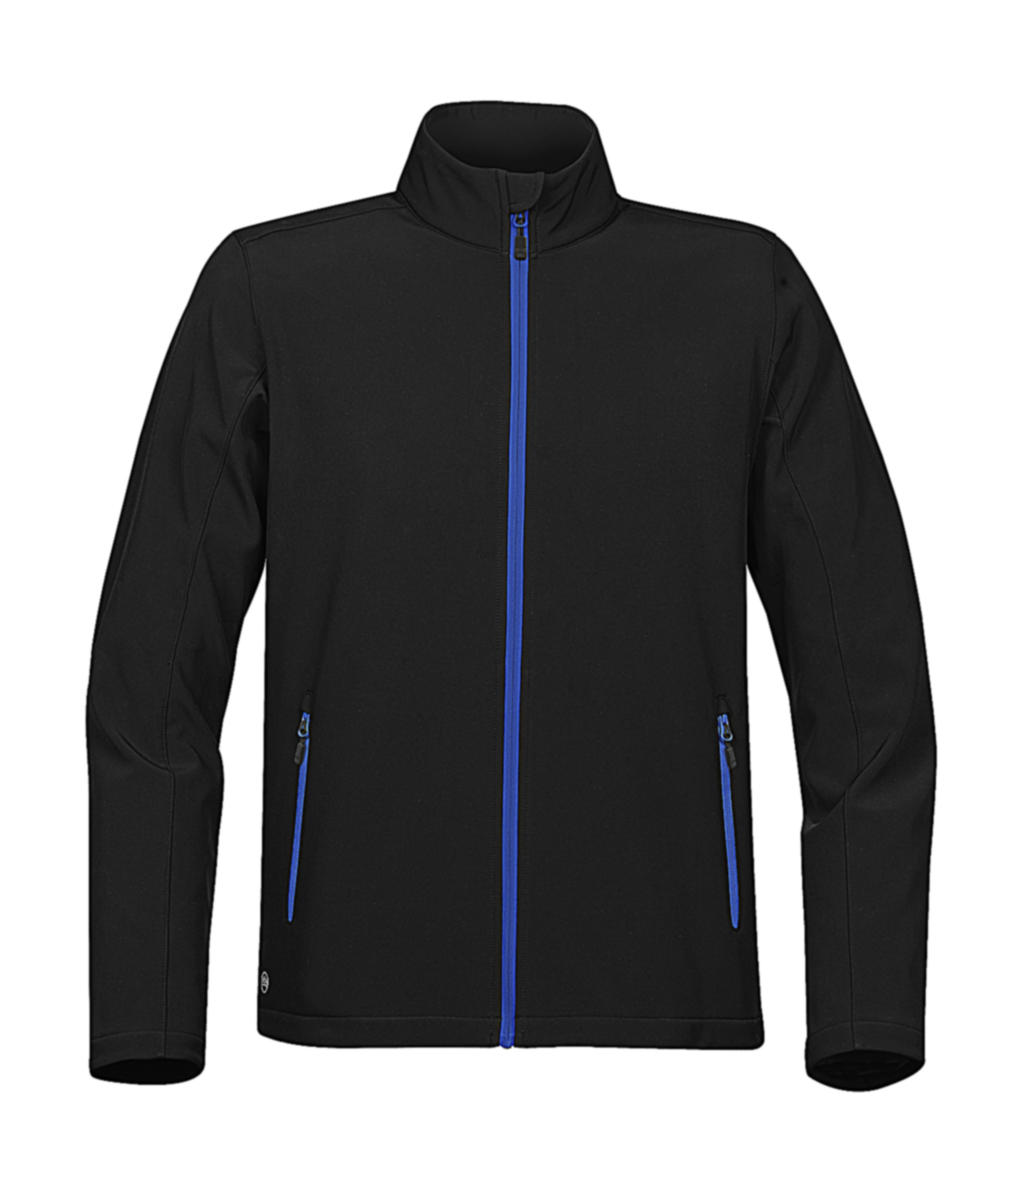  Orbiter Softshell Jacket in Farbe Black/Azure